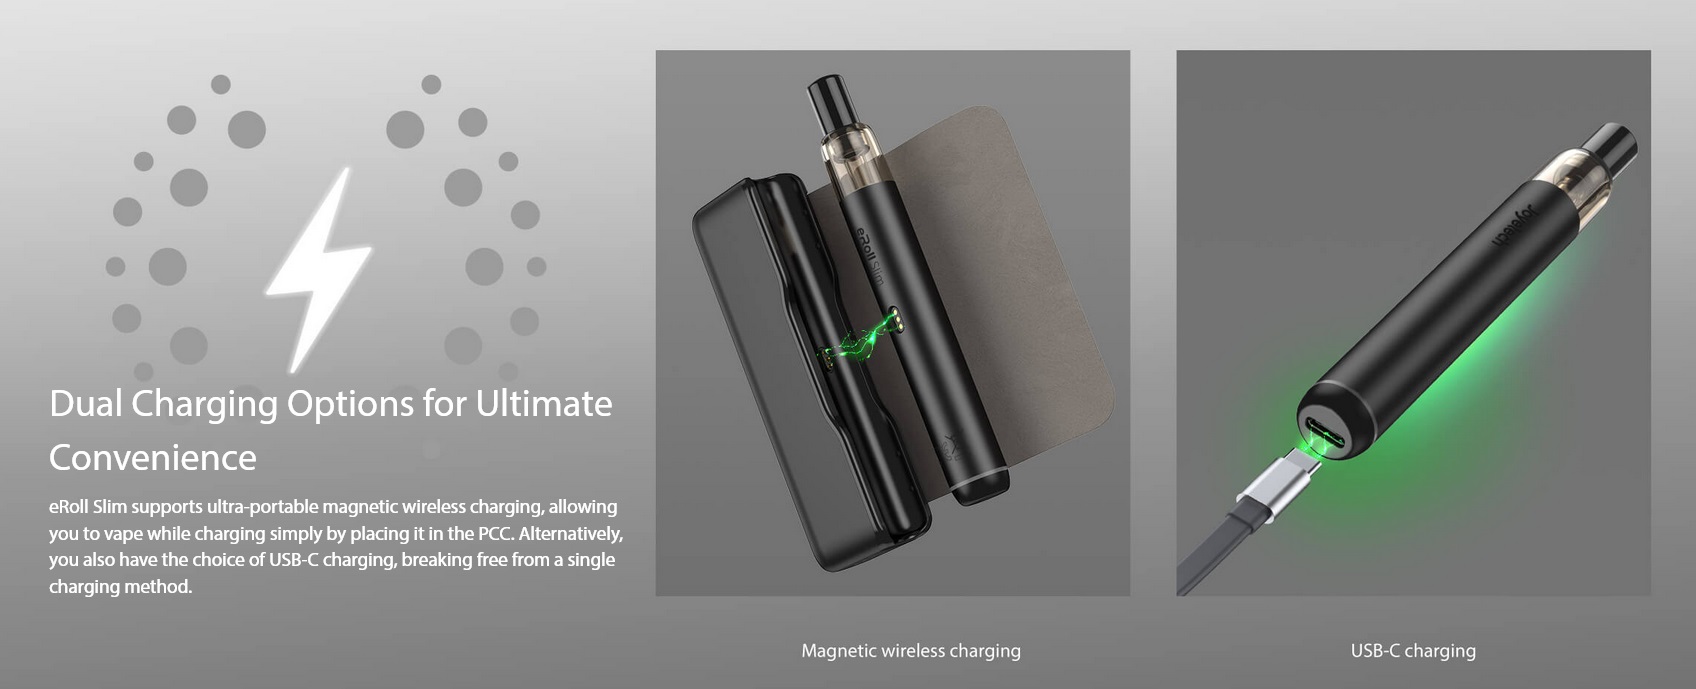 e-cigareta-joyetech-eroll-slim-kompletni-set-nabijeni